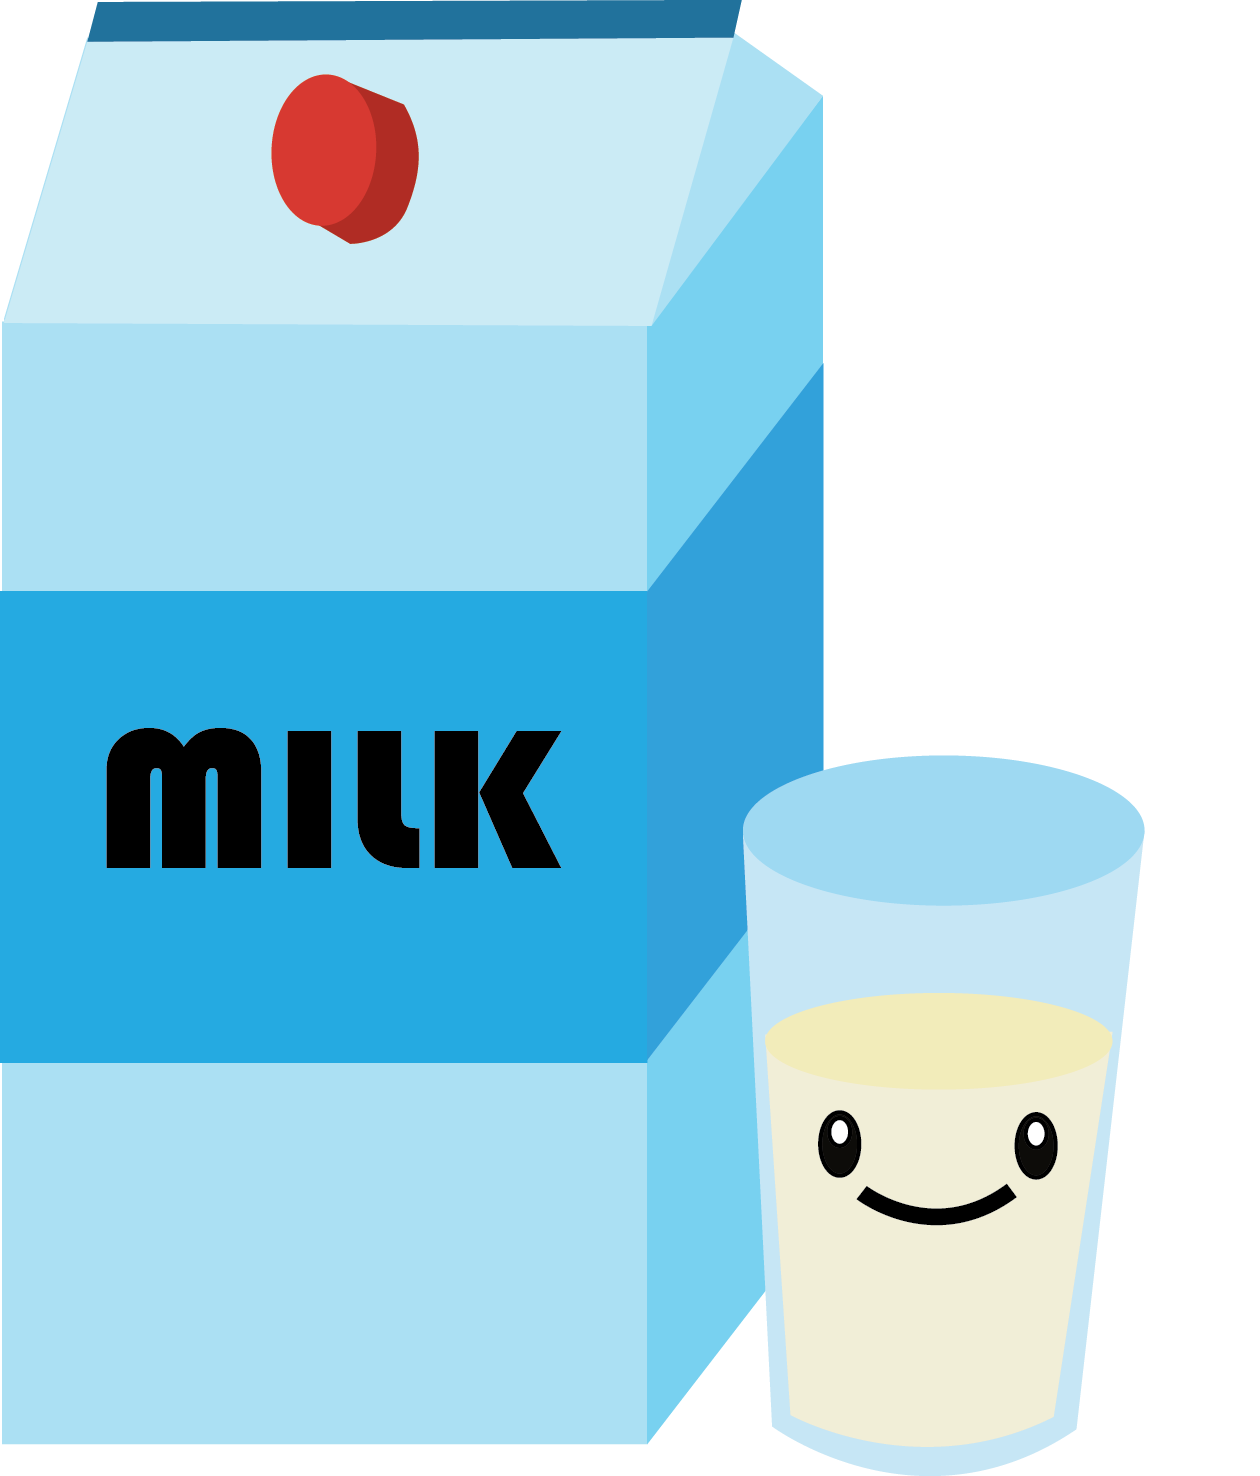 https://www.freepnglogos.com/uploads/milk-png/milk-dairy-curriculm-nutrition-education-program-northern-8.png